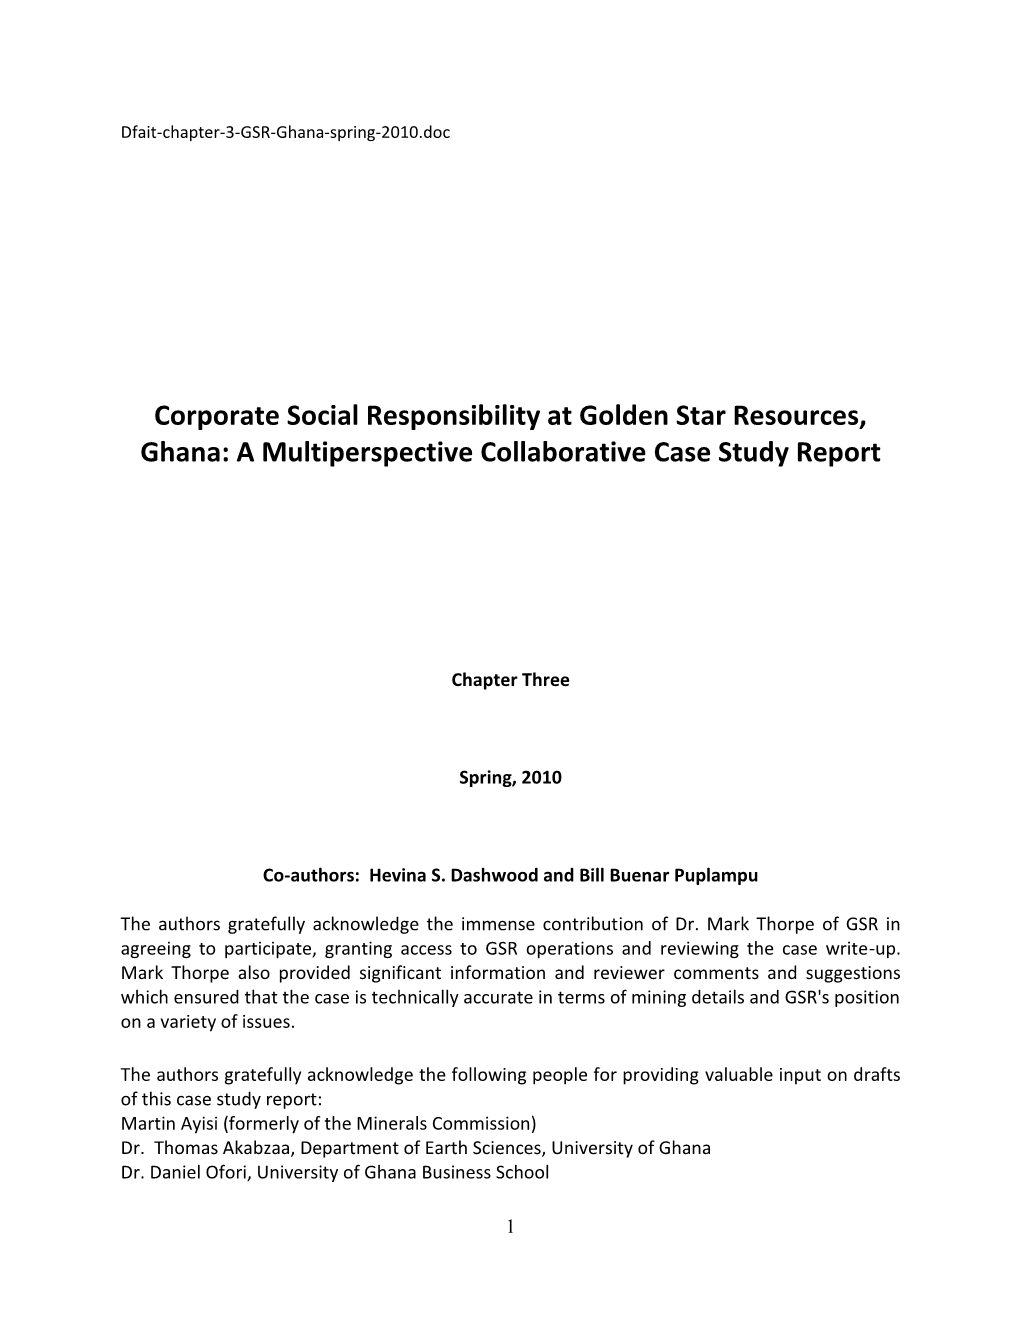 20-Page Summary Report: GSR Case Study